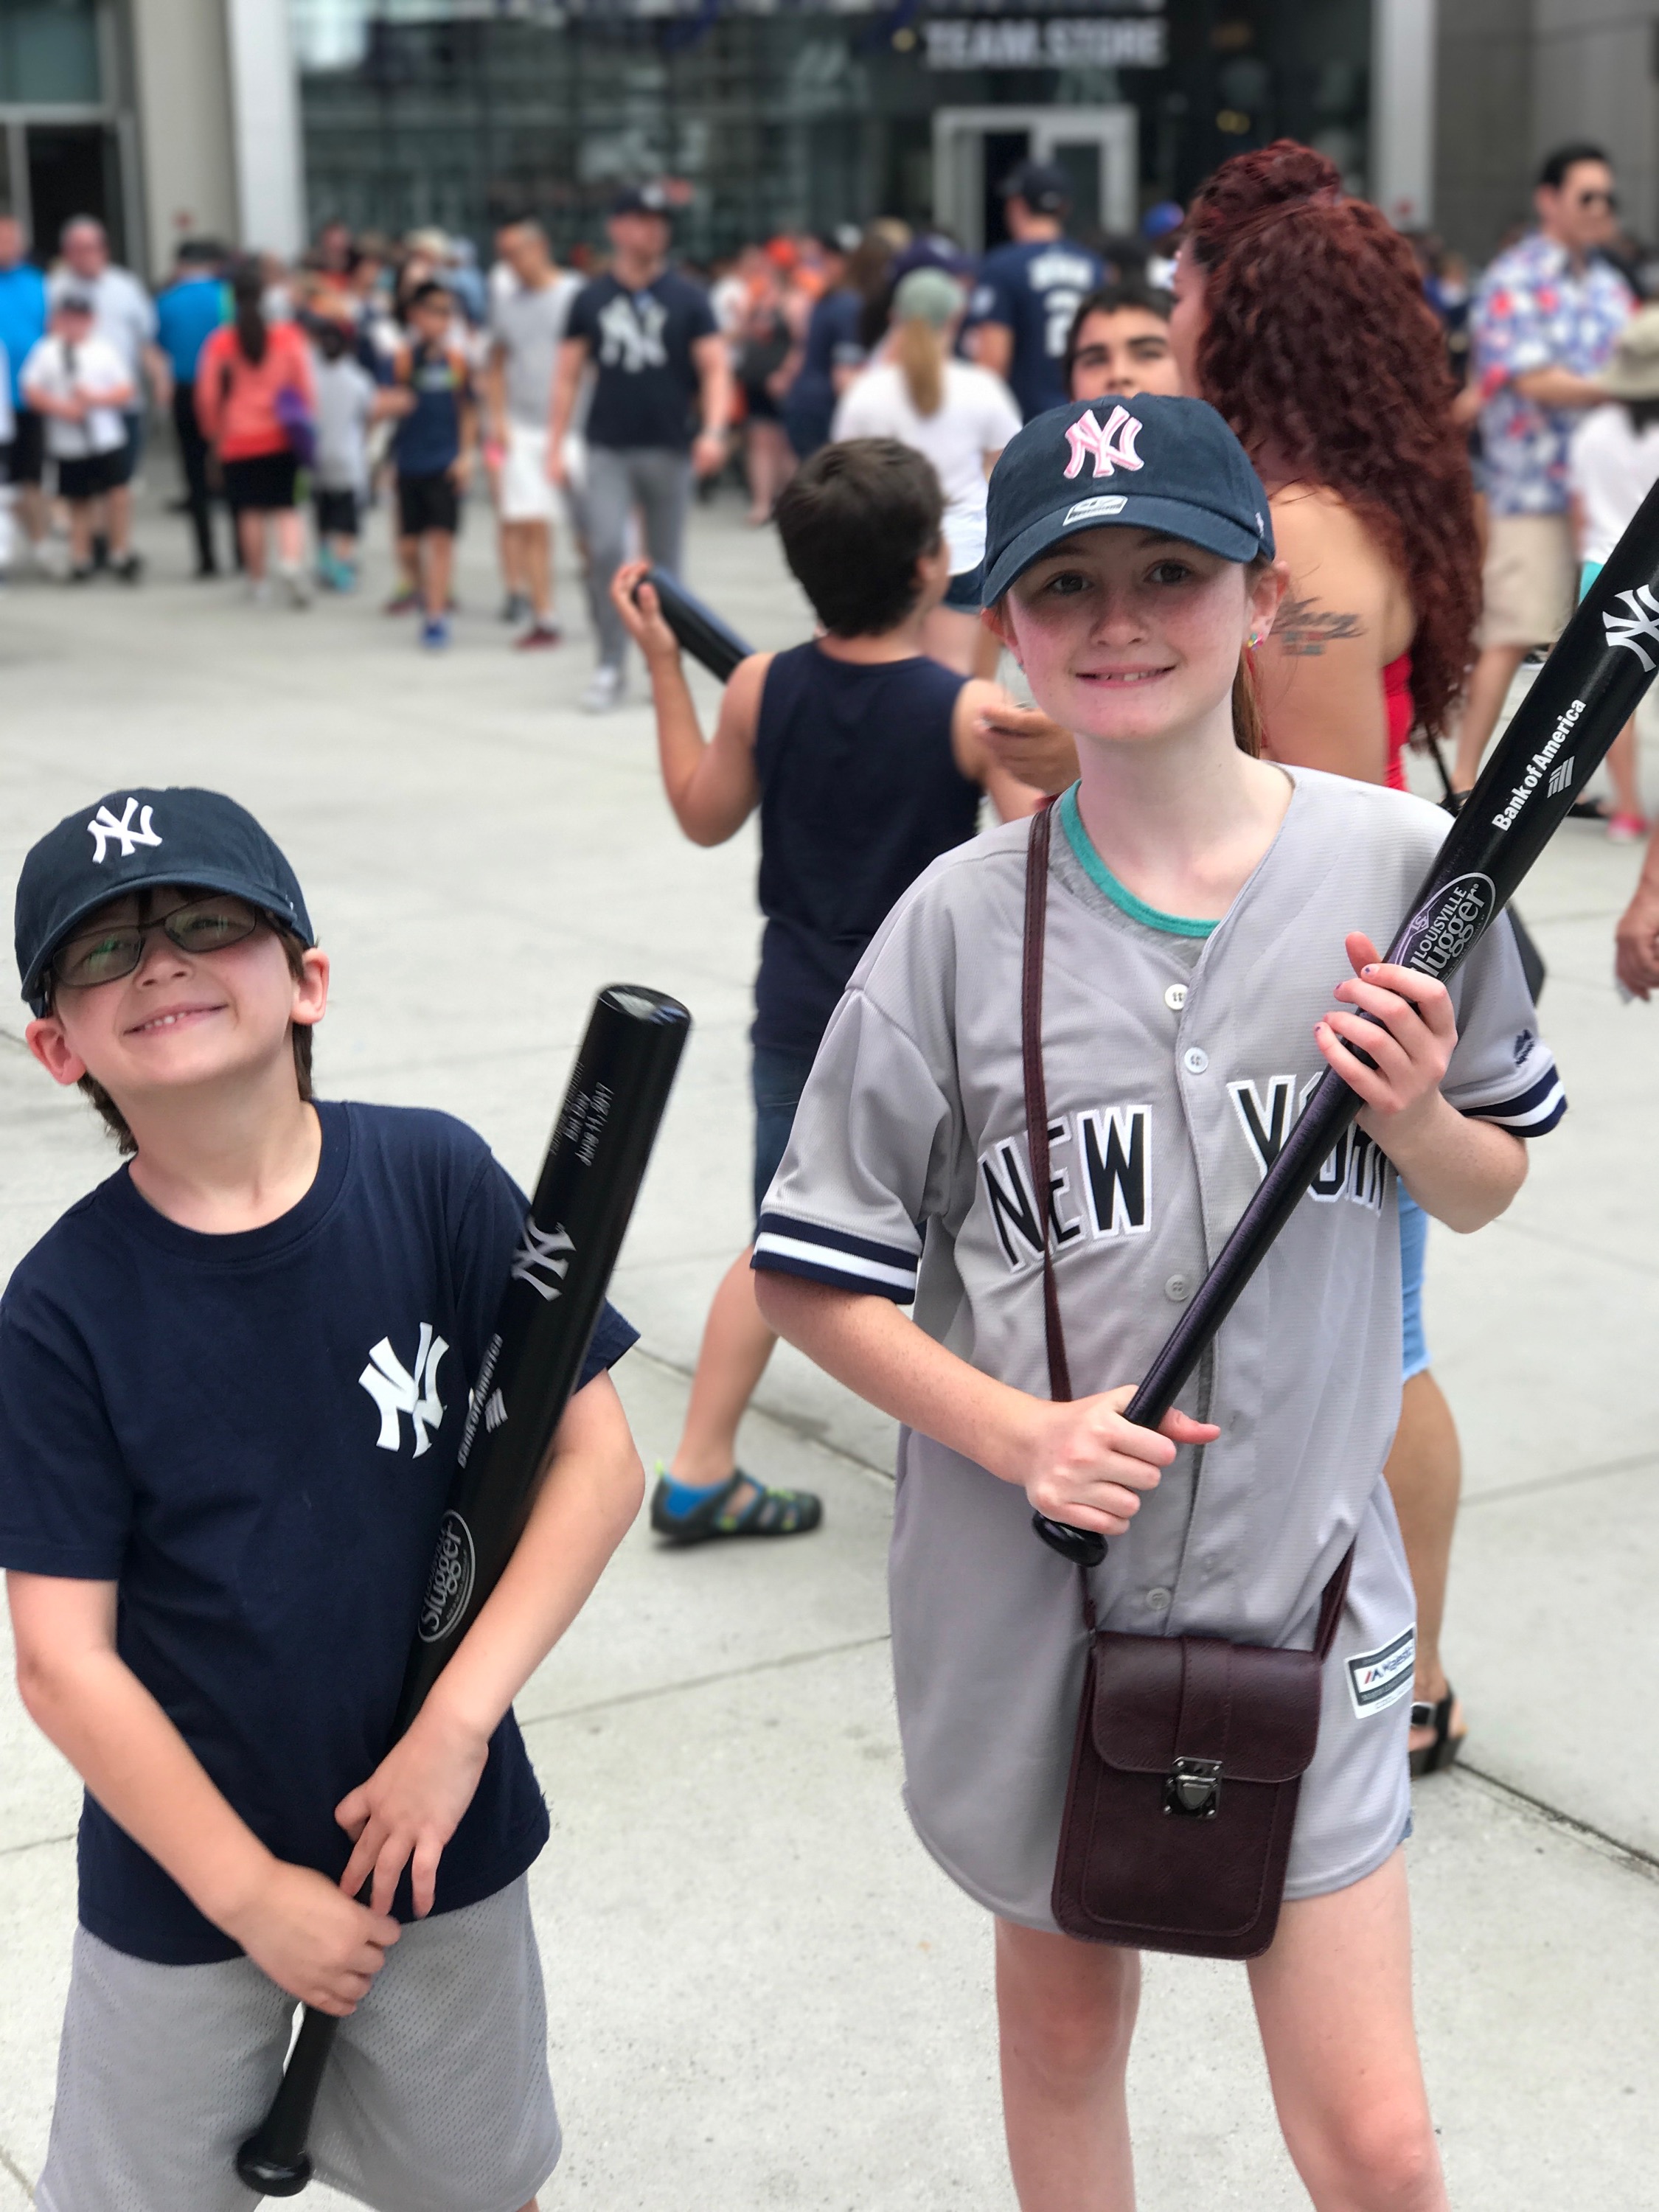 a boy and girl holding baseball bats